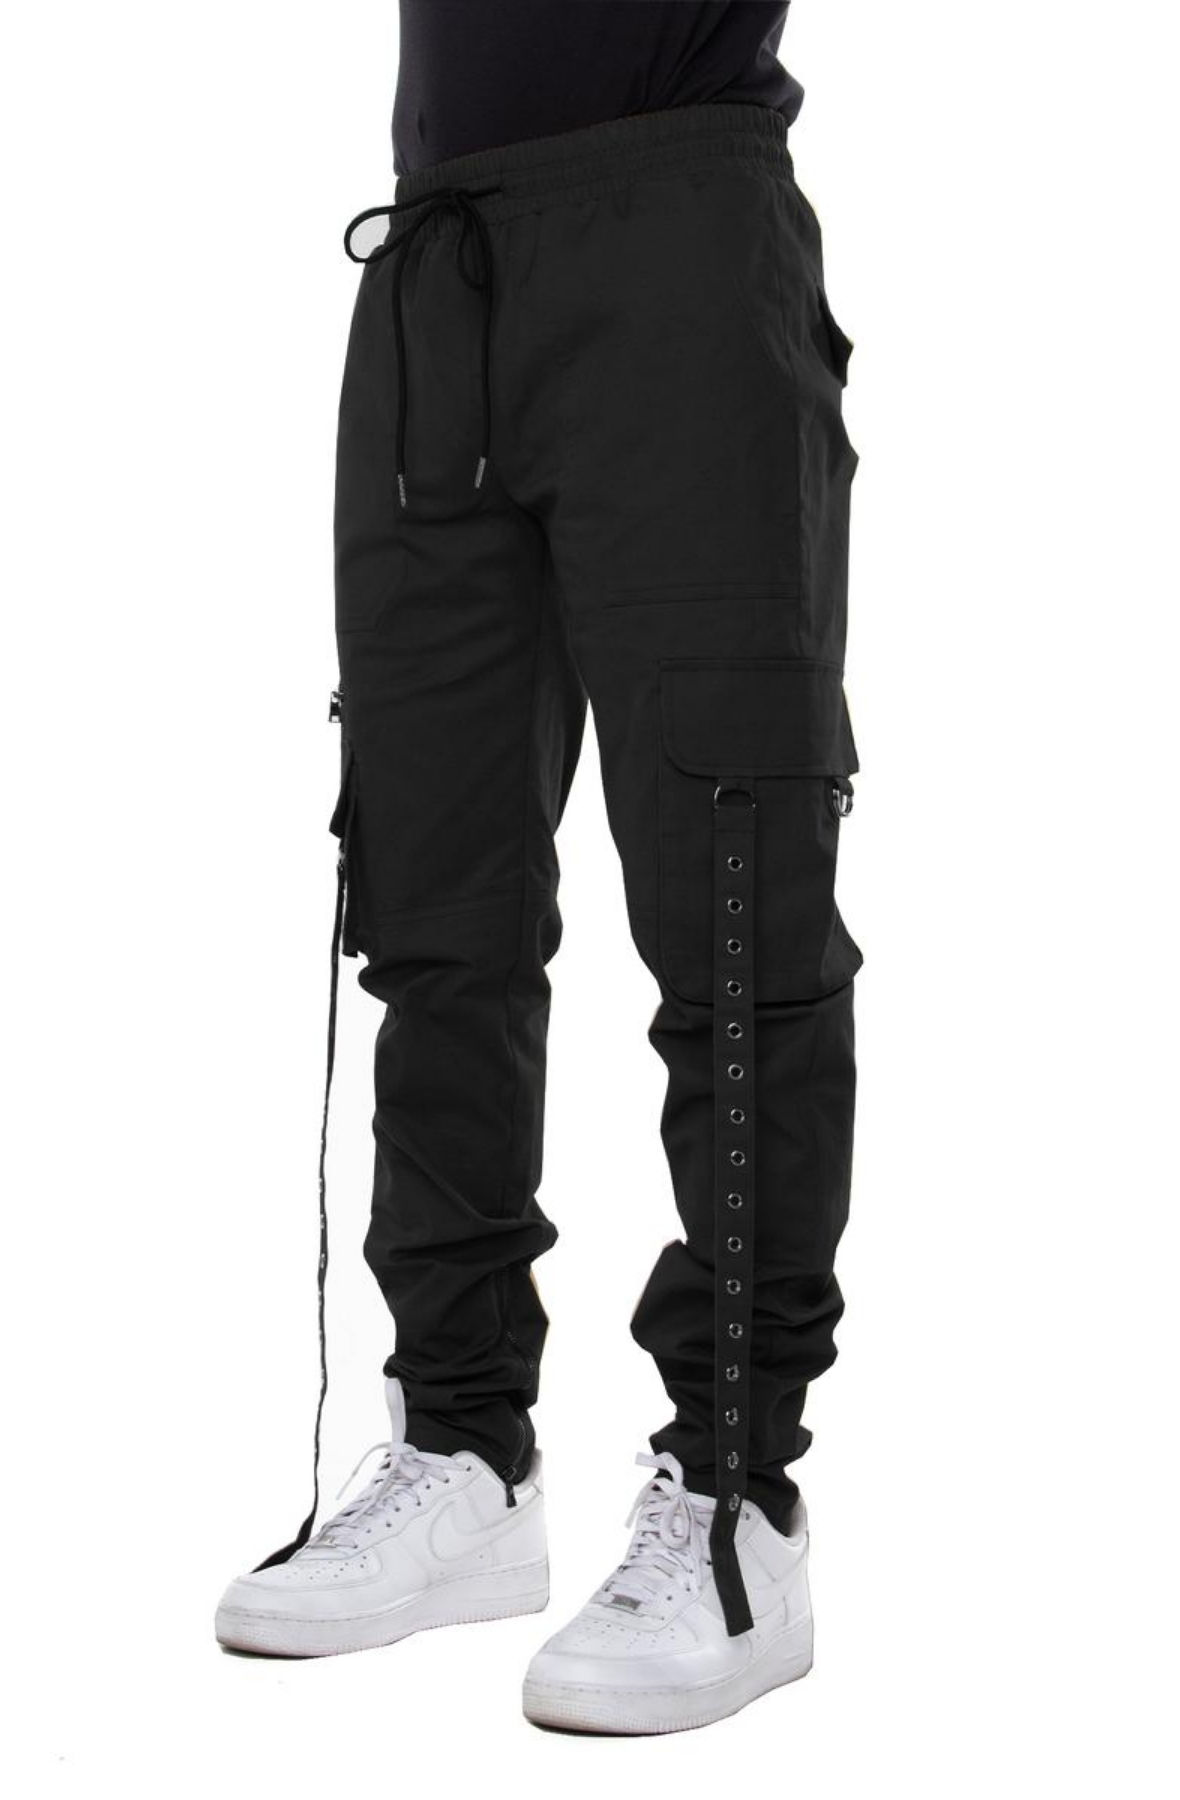 black fashion cargo pants